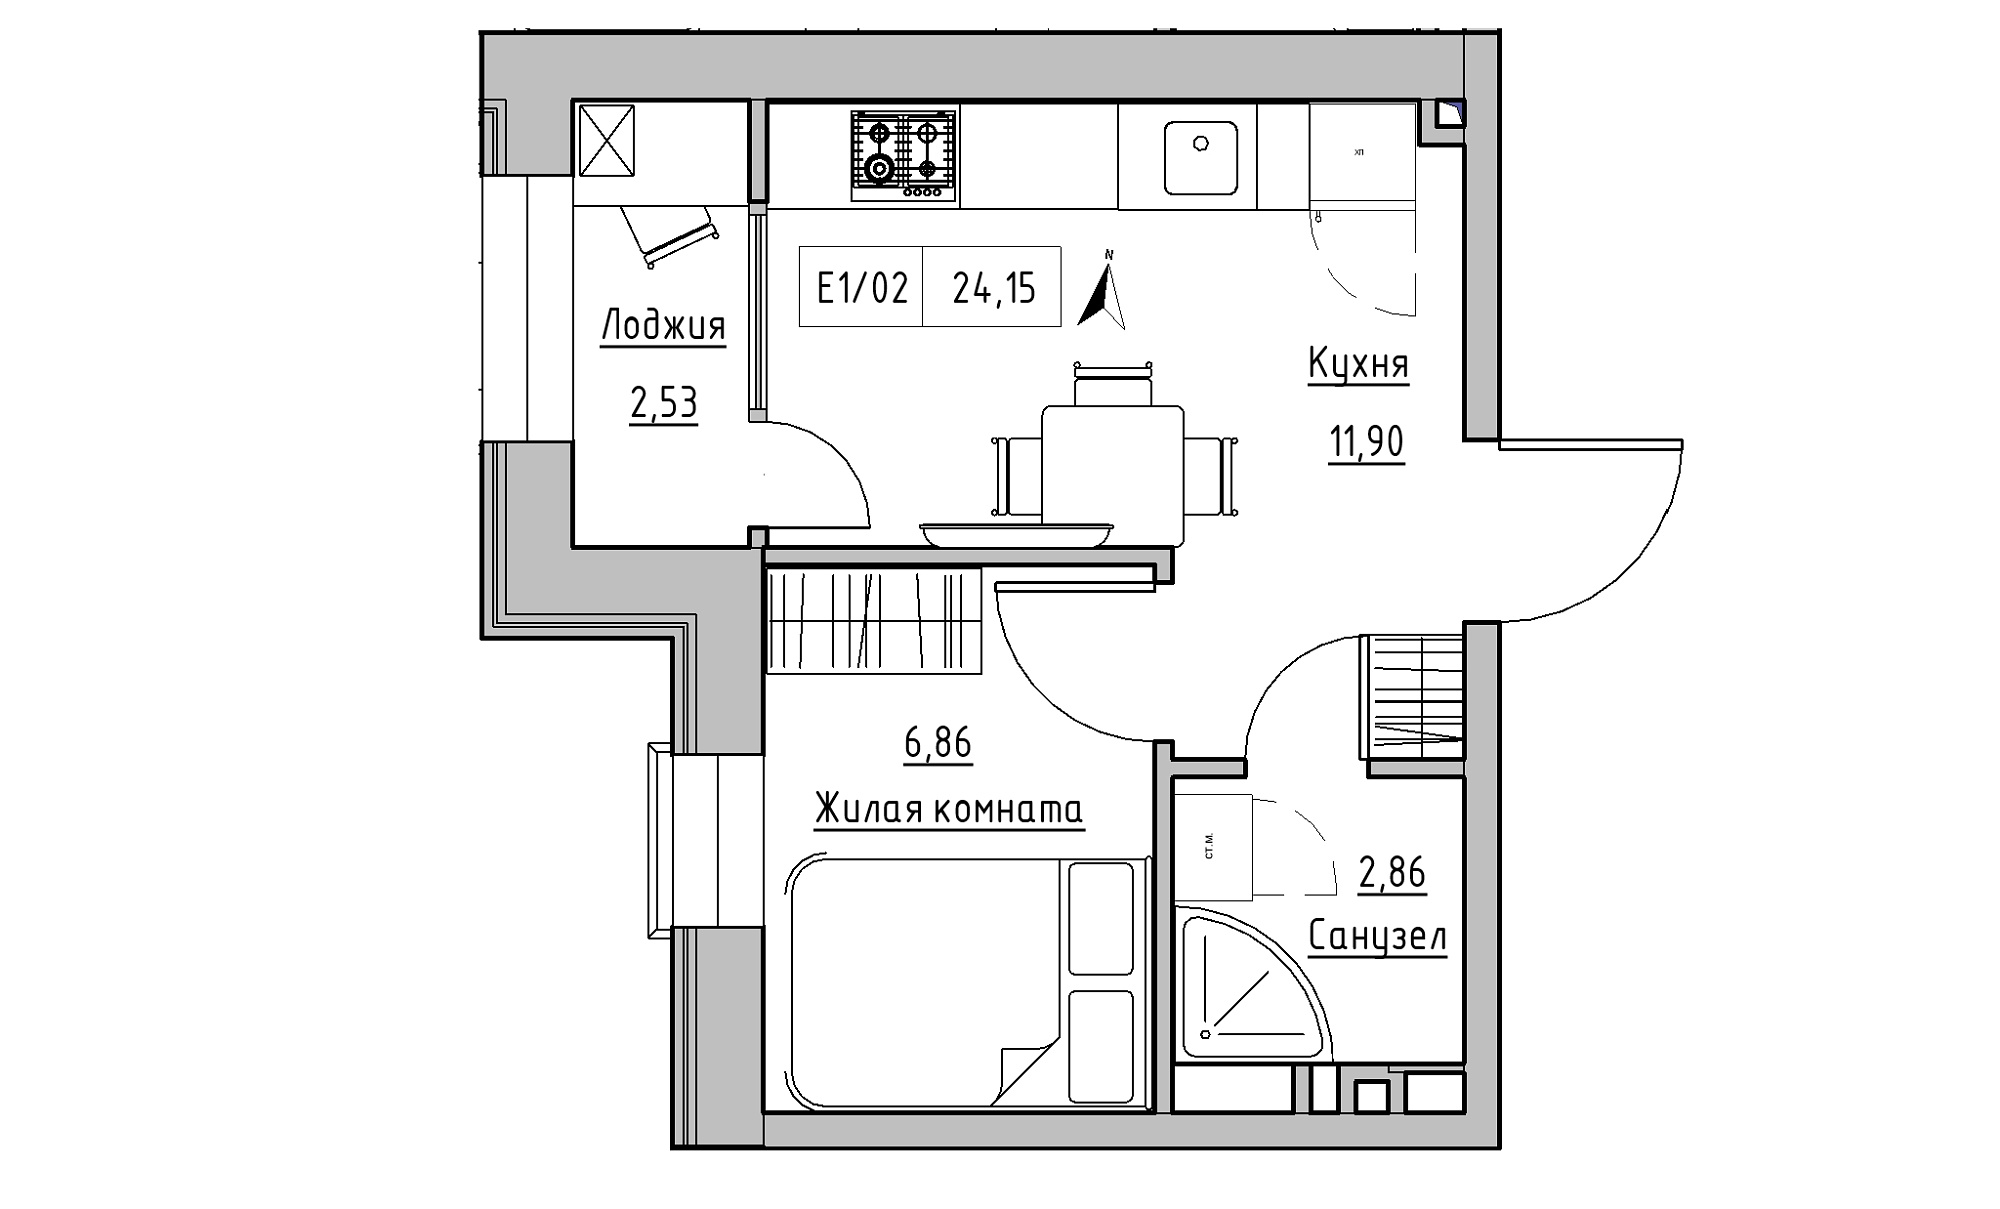 Planning 1-rm flats area 24.15m2, KS-015-03/0001.